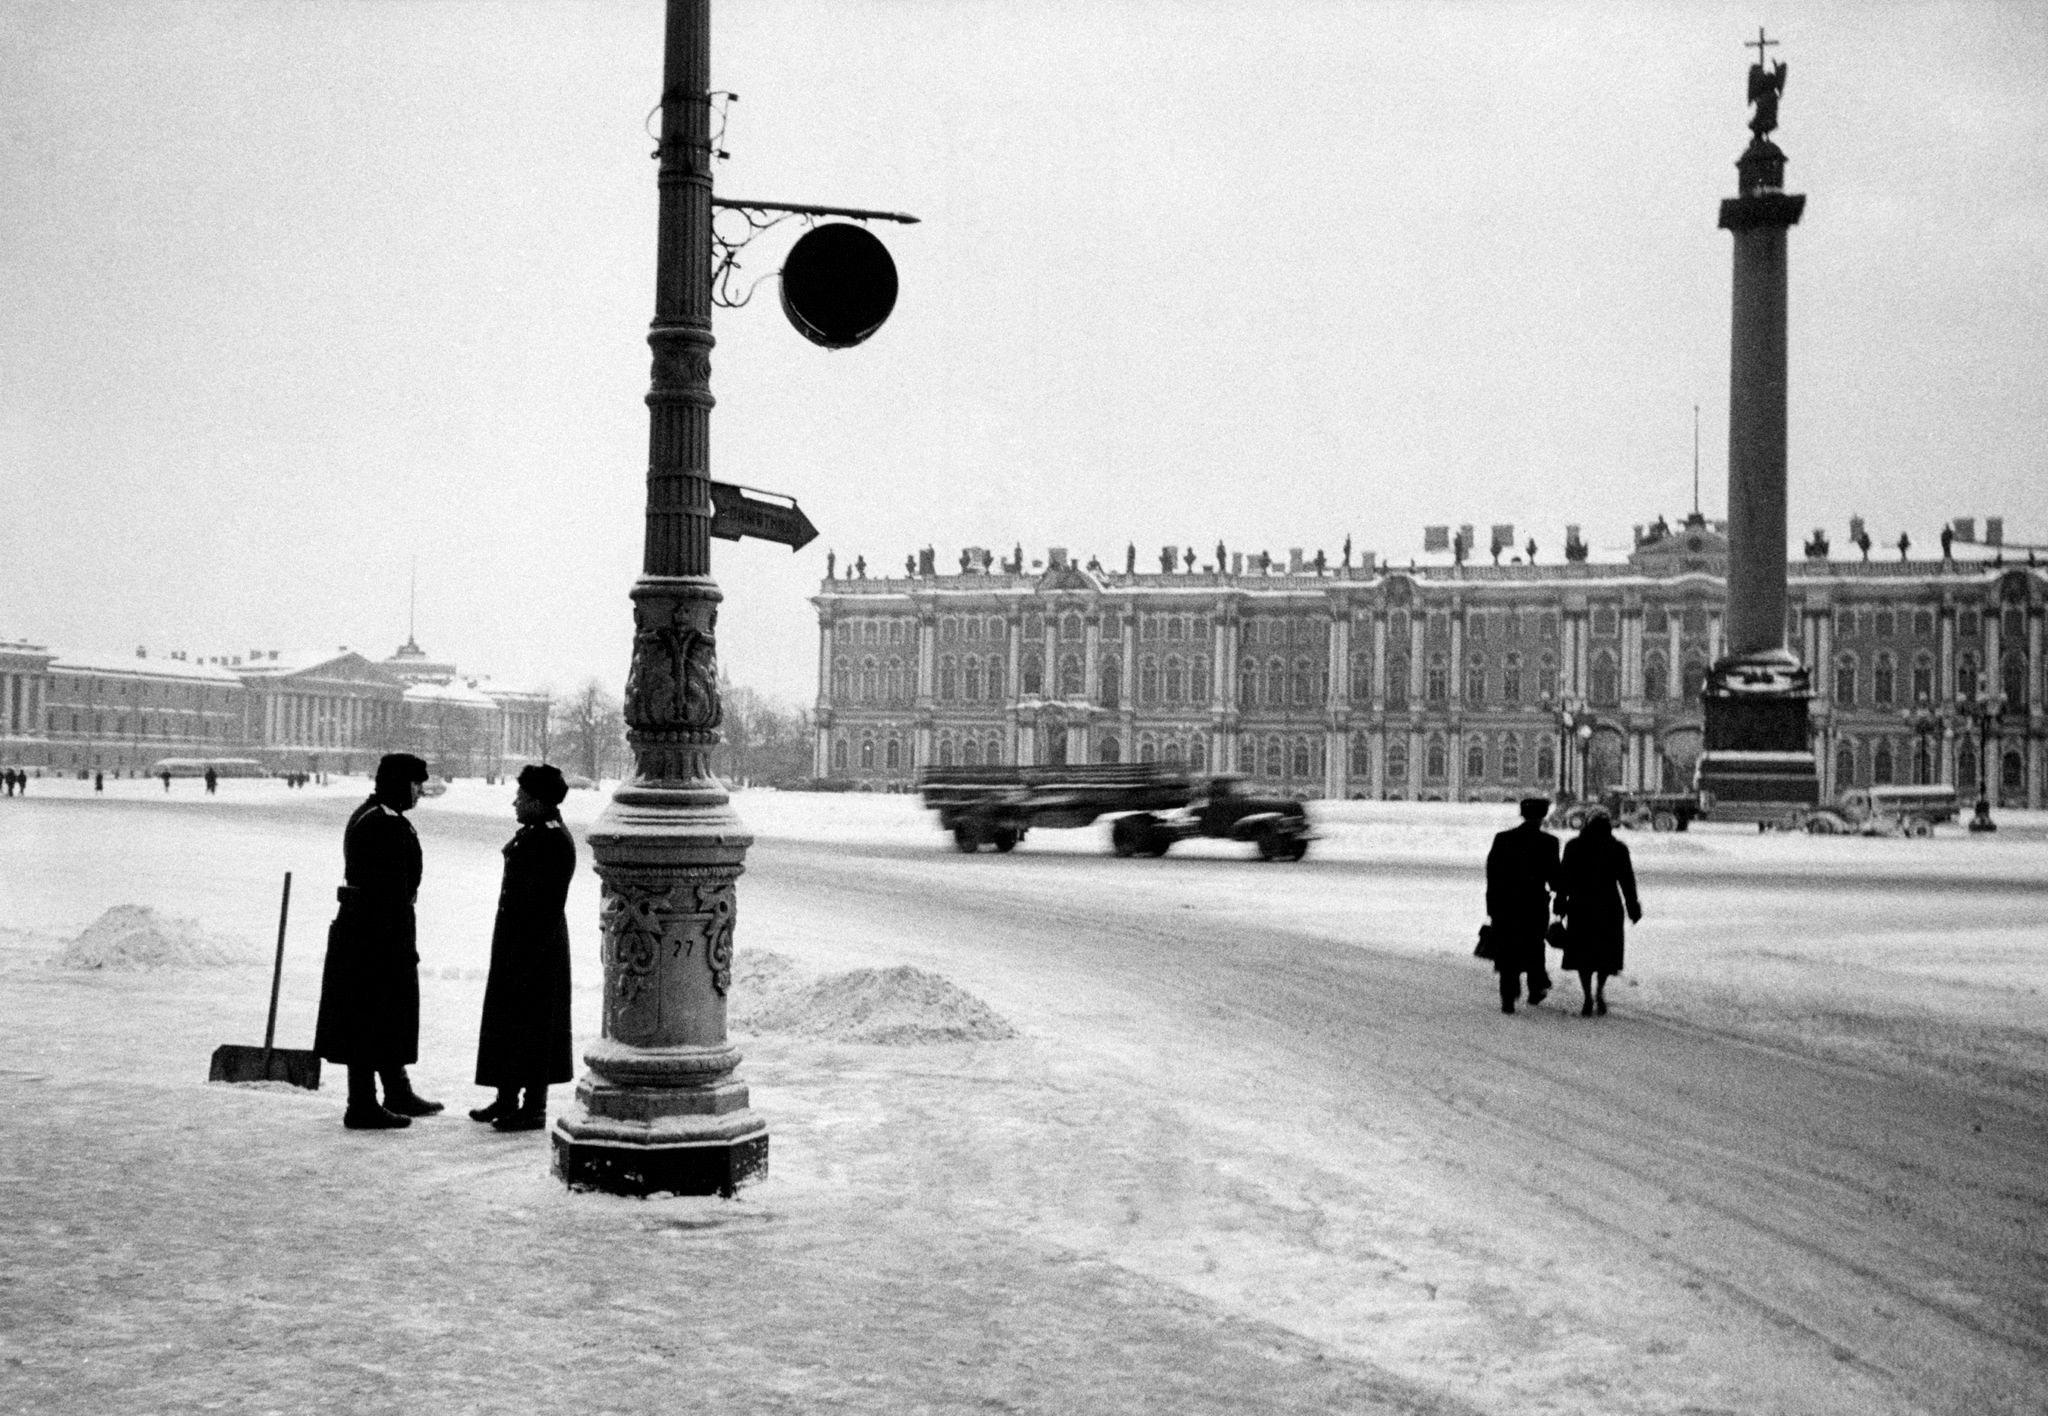 Дворцовая площадь, Ленинград, 1960-е. Фотограф Марио Де Бьязи